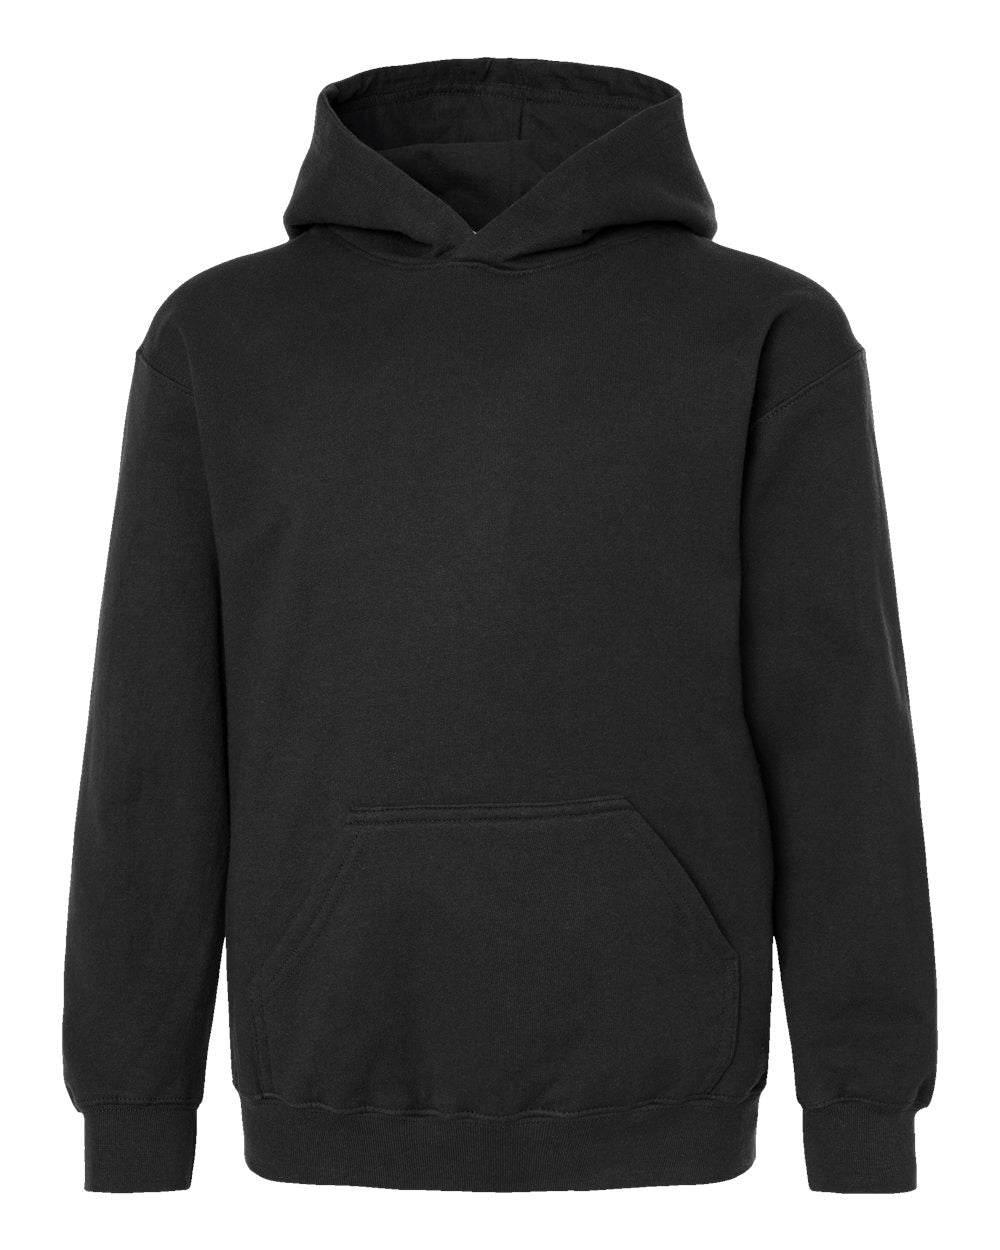 Tultex Youth Hooded Sweatshirt - Black